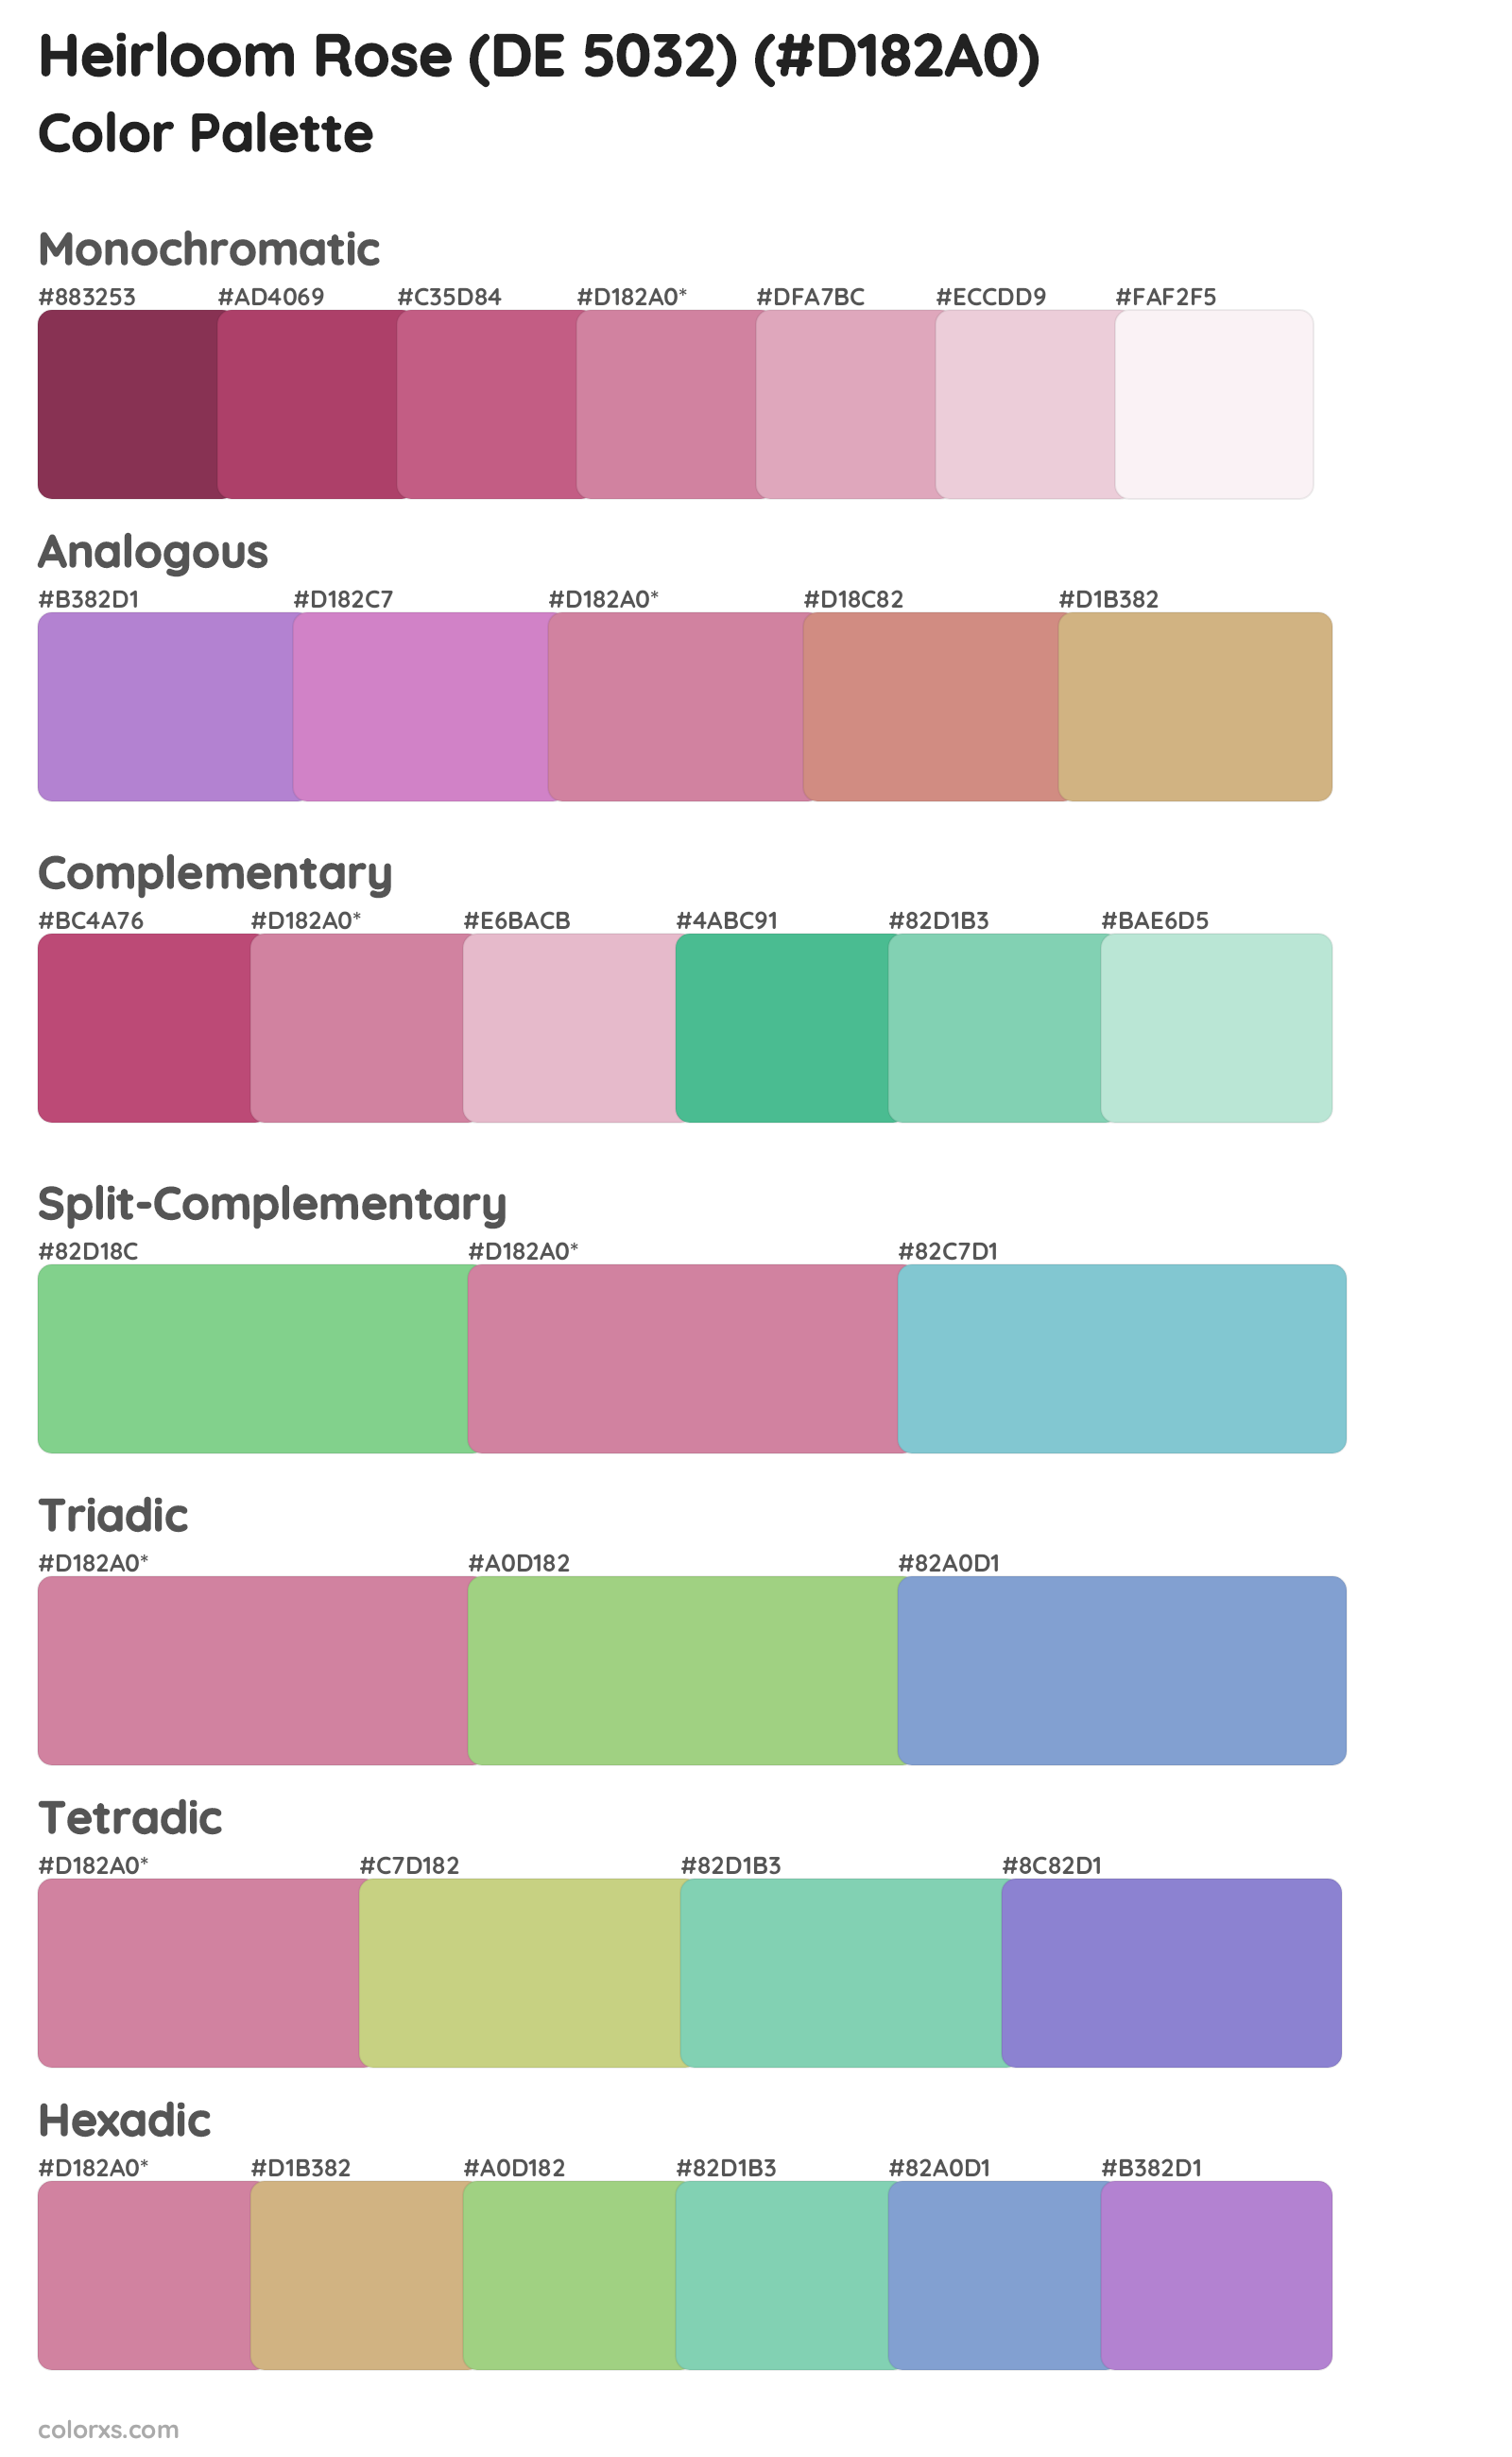 Heirloom Rose (DE 5032) Color Scheme Palettes